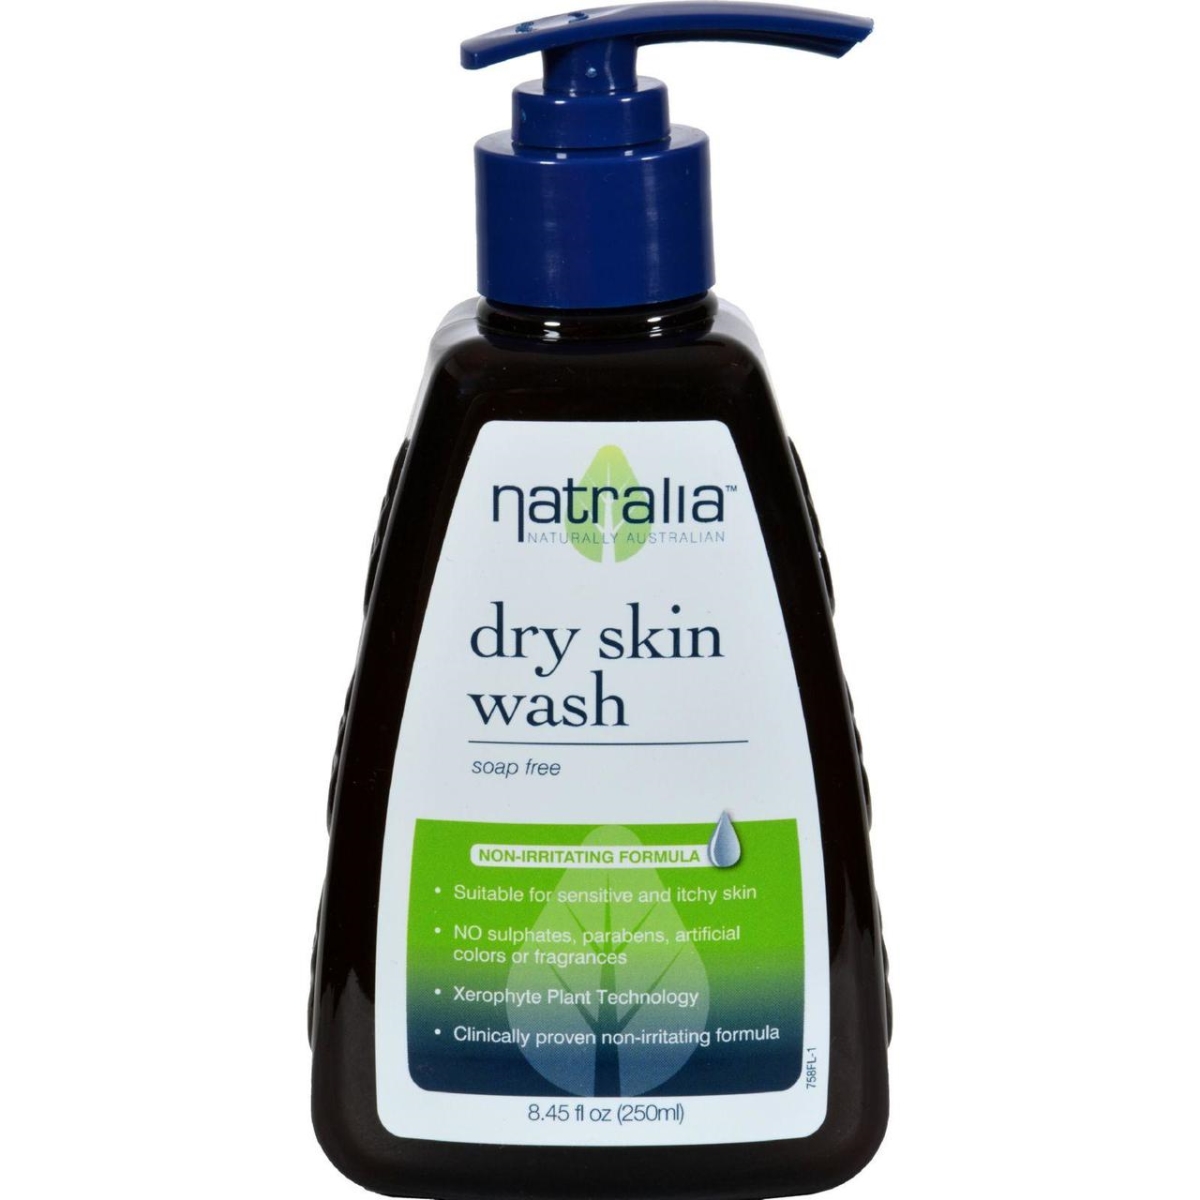 Hg0100529 8.45 Fl Oz Dry Skin Wash